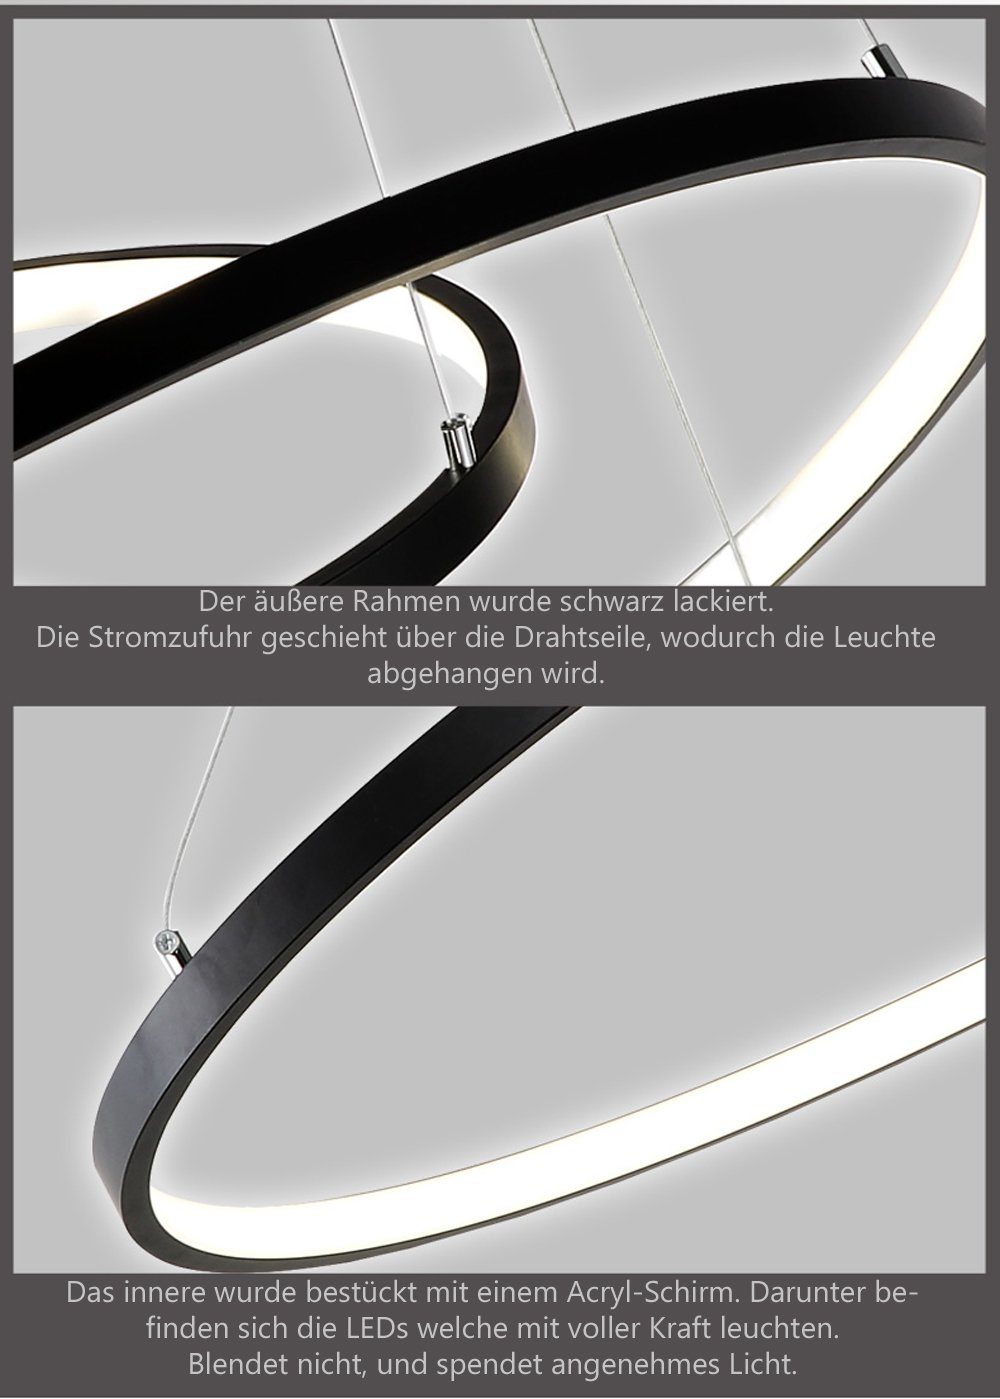 Euroton LED LED Hängelampe fest mit schwarz Pendelleuchte Pendelleuchte 3000 warm, kalt einstellbar LED Fernbedienung, stufenlos - 2130 LED - k integriert, k 7000